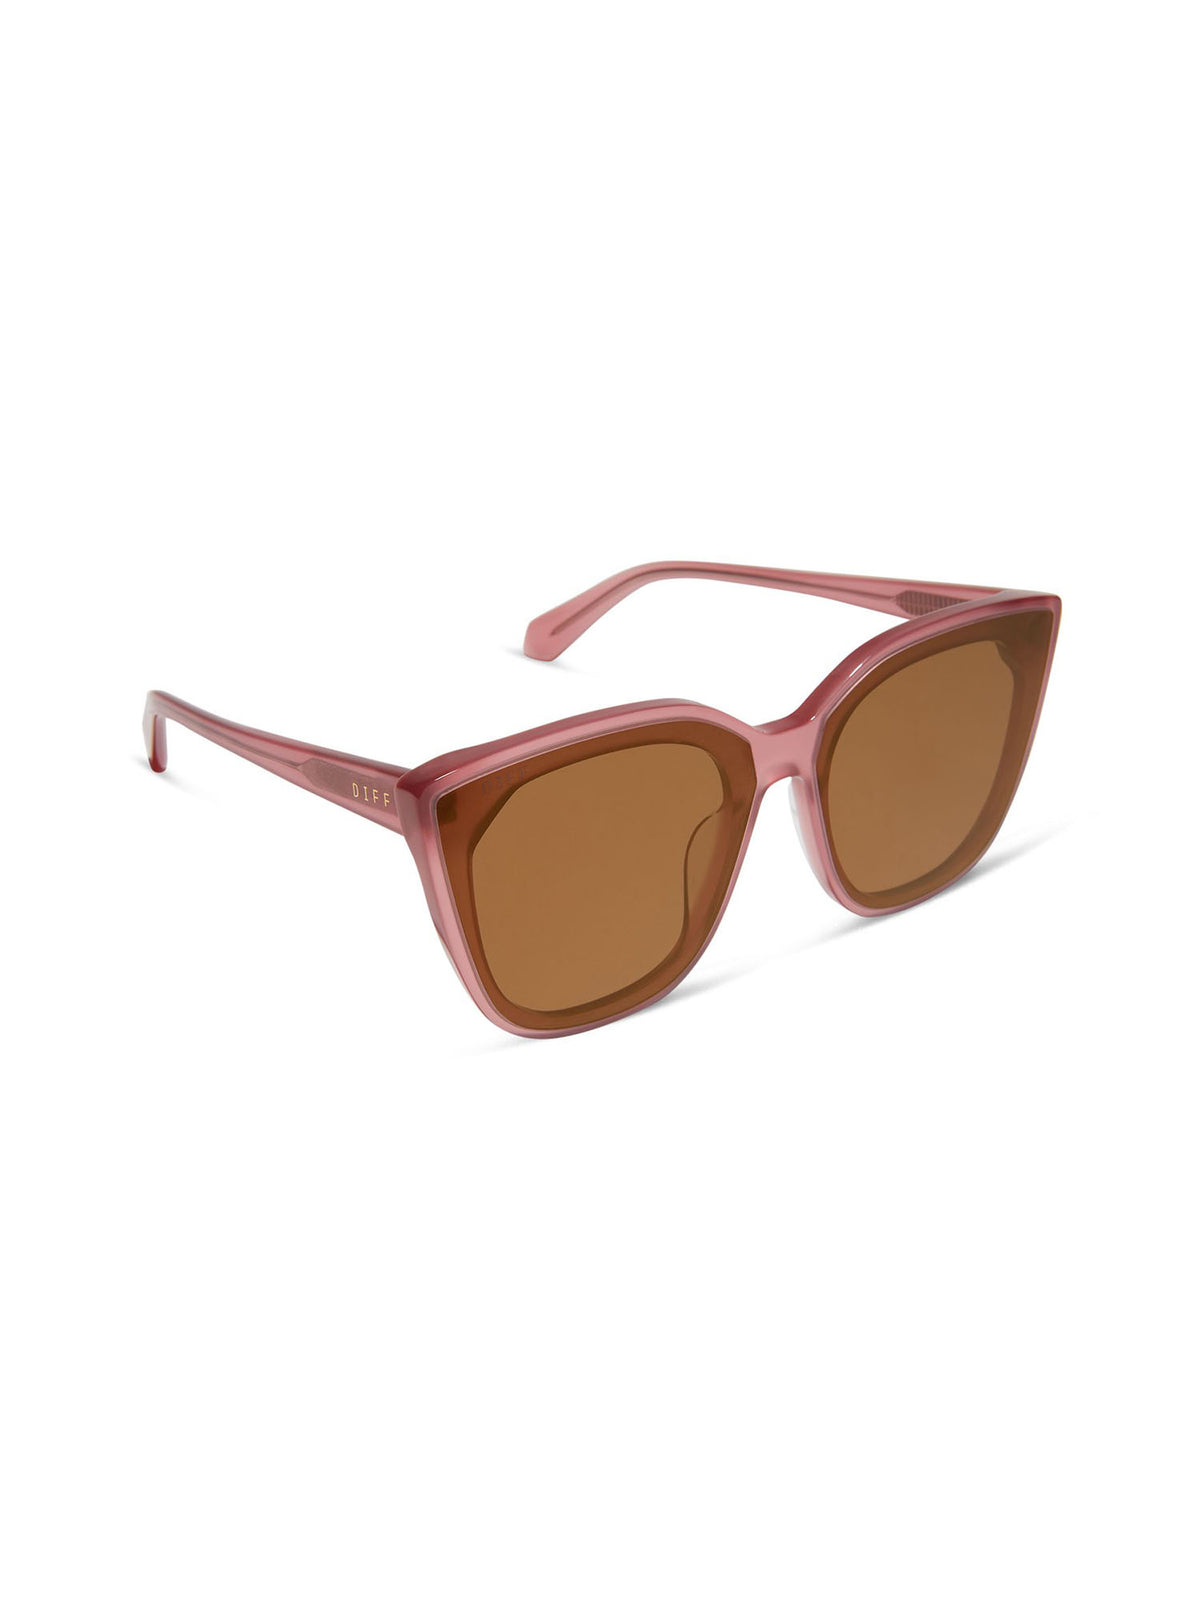 diff eyewear gjelina sunglasses in guava brown